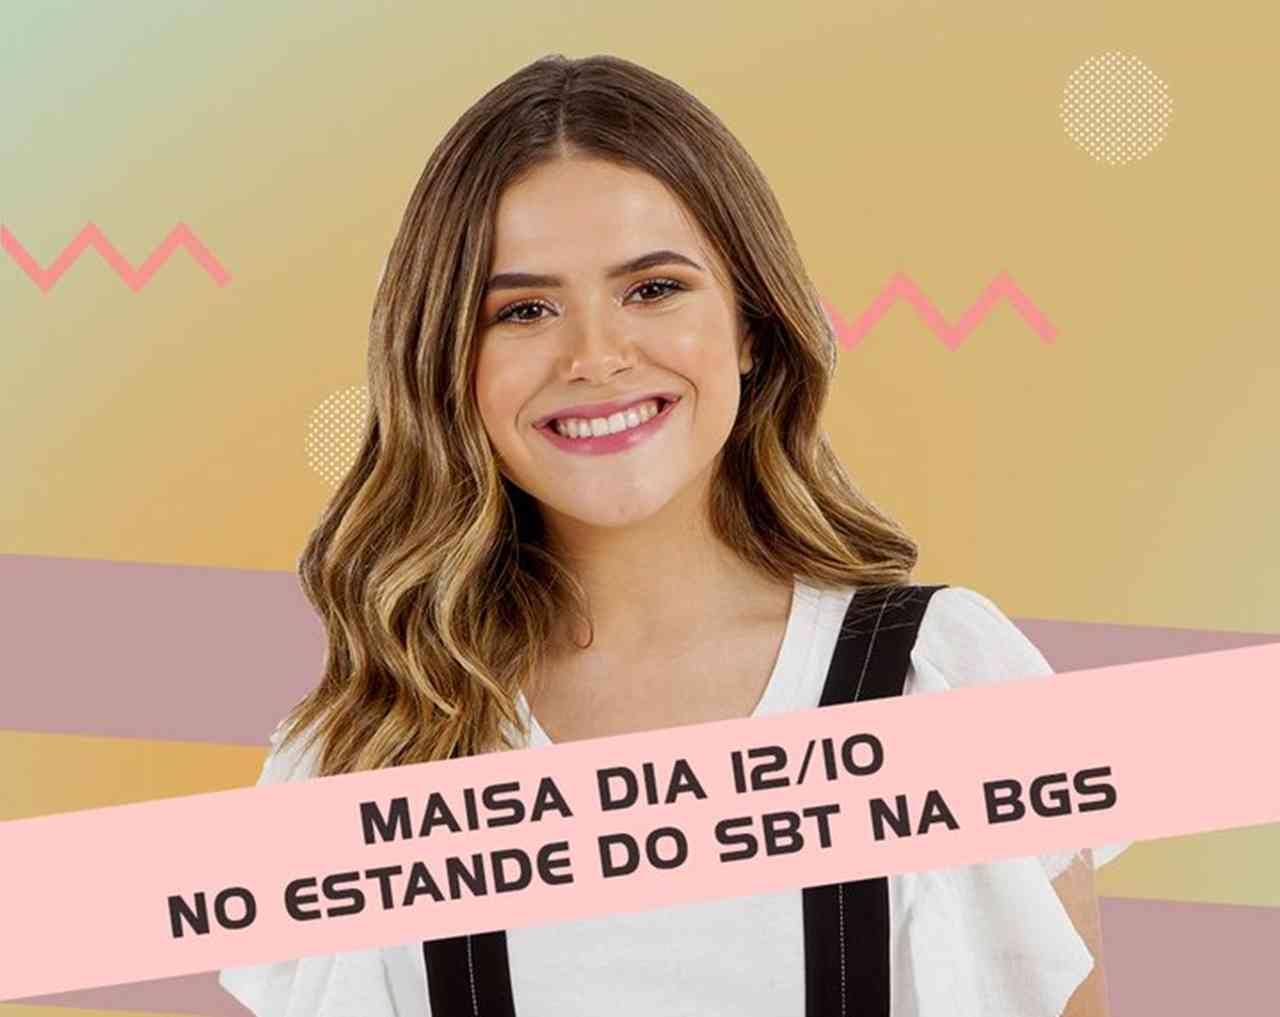 BGS 2019 | Maísa estará presente no evento 8